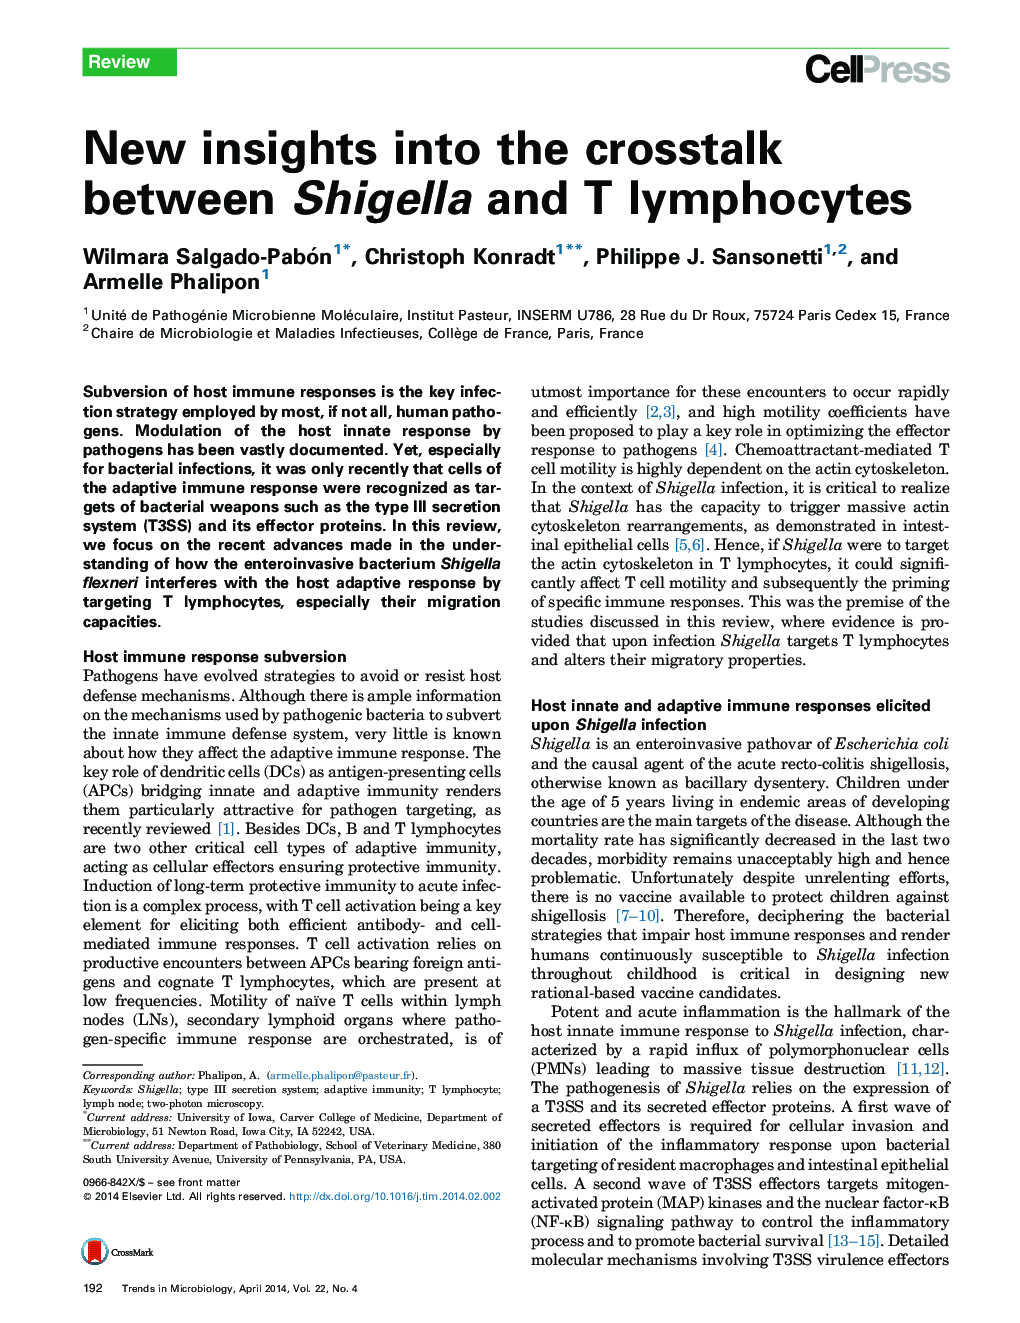 New insights into the crosstalk between Shigella and T lymphocytes